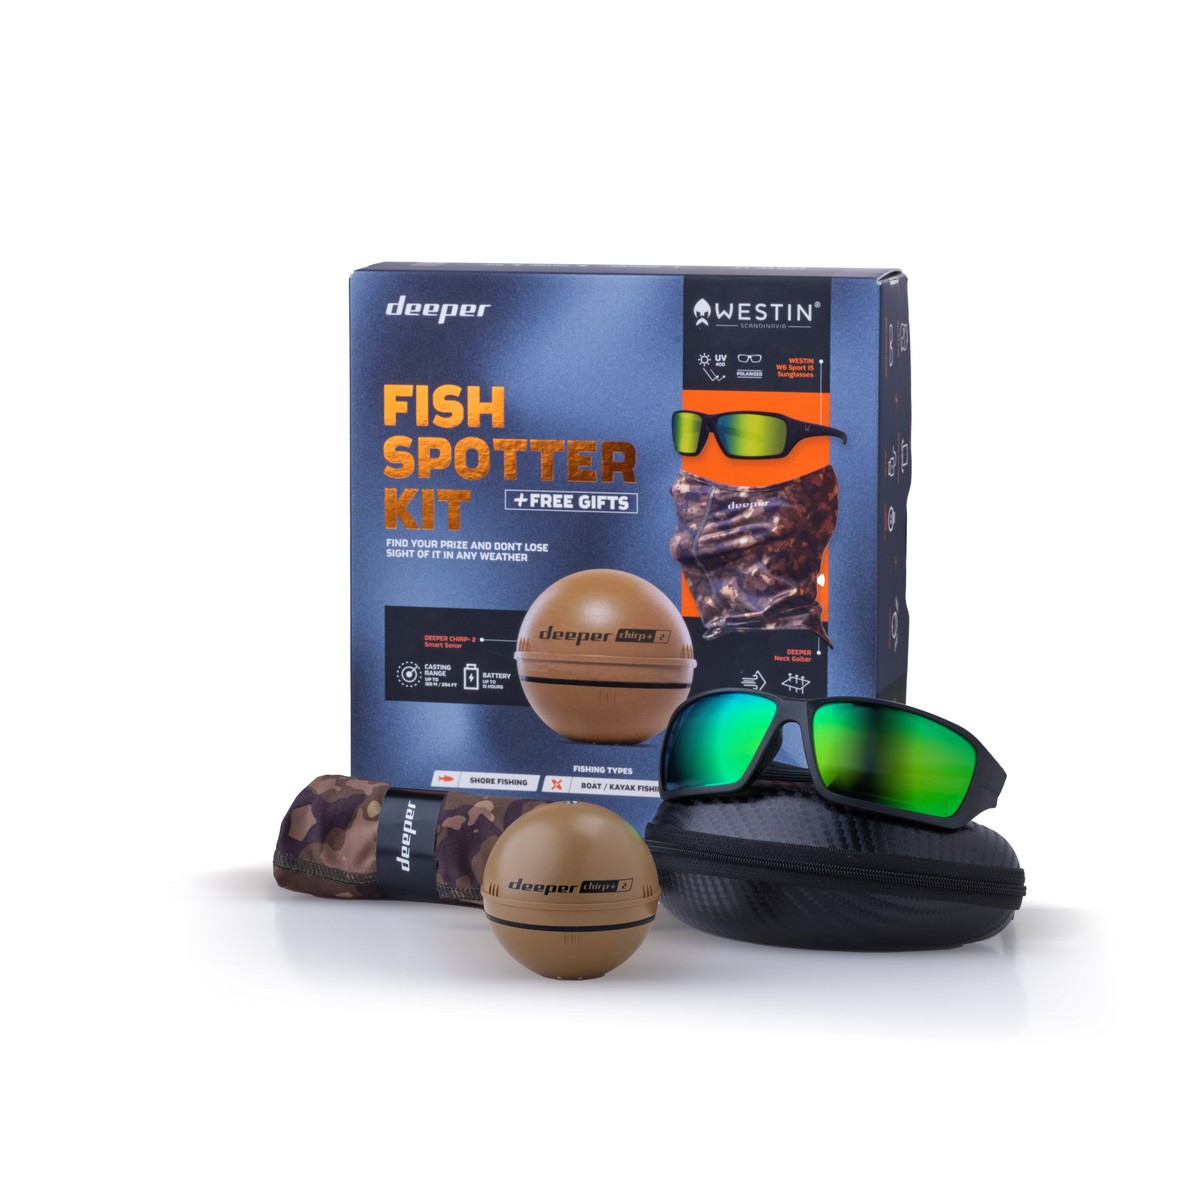 Deeper Smart Sonar Chirp+ 2 – Fish Spotter kit